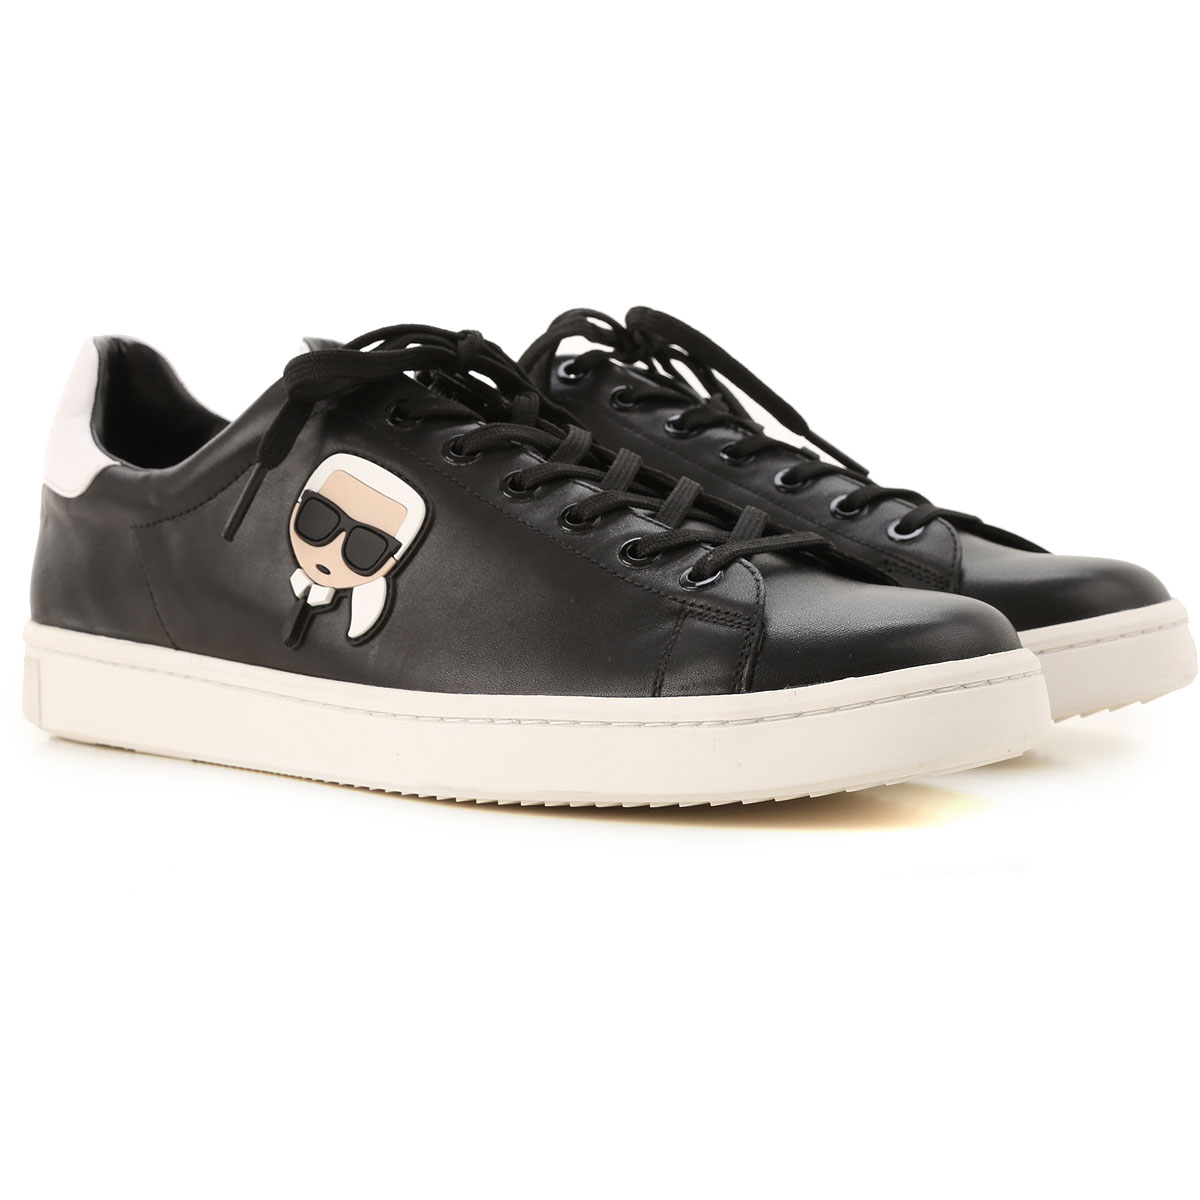 Mens Shoes Karl Lagerfeld, Style code: kl51210-000-black